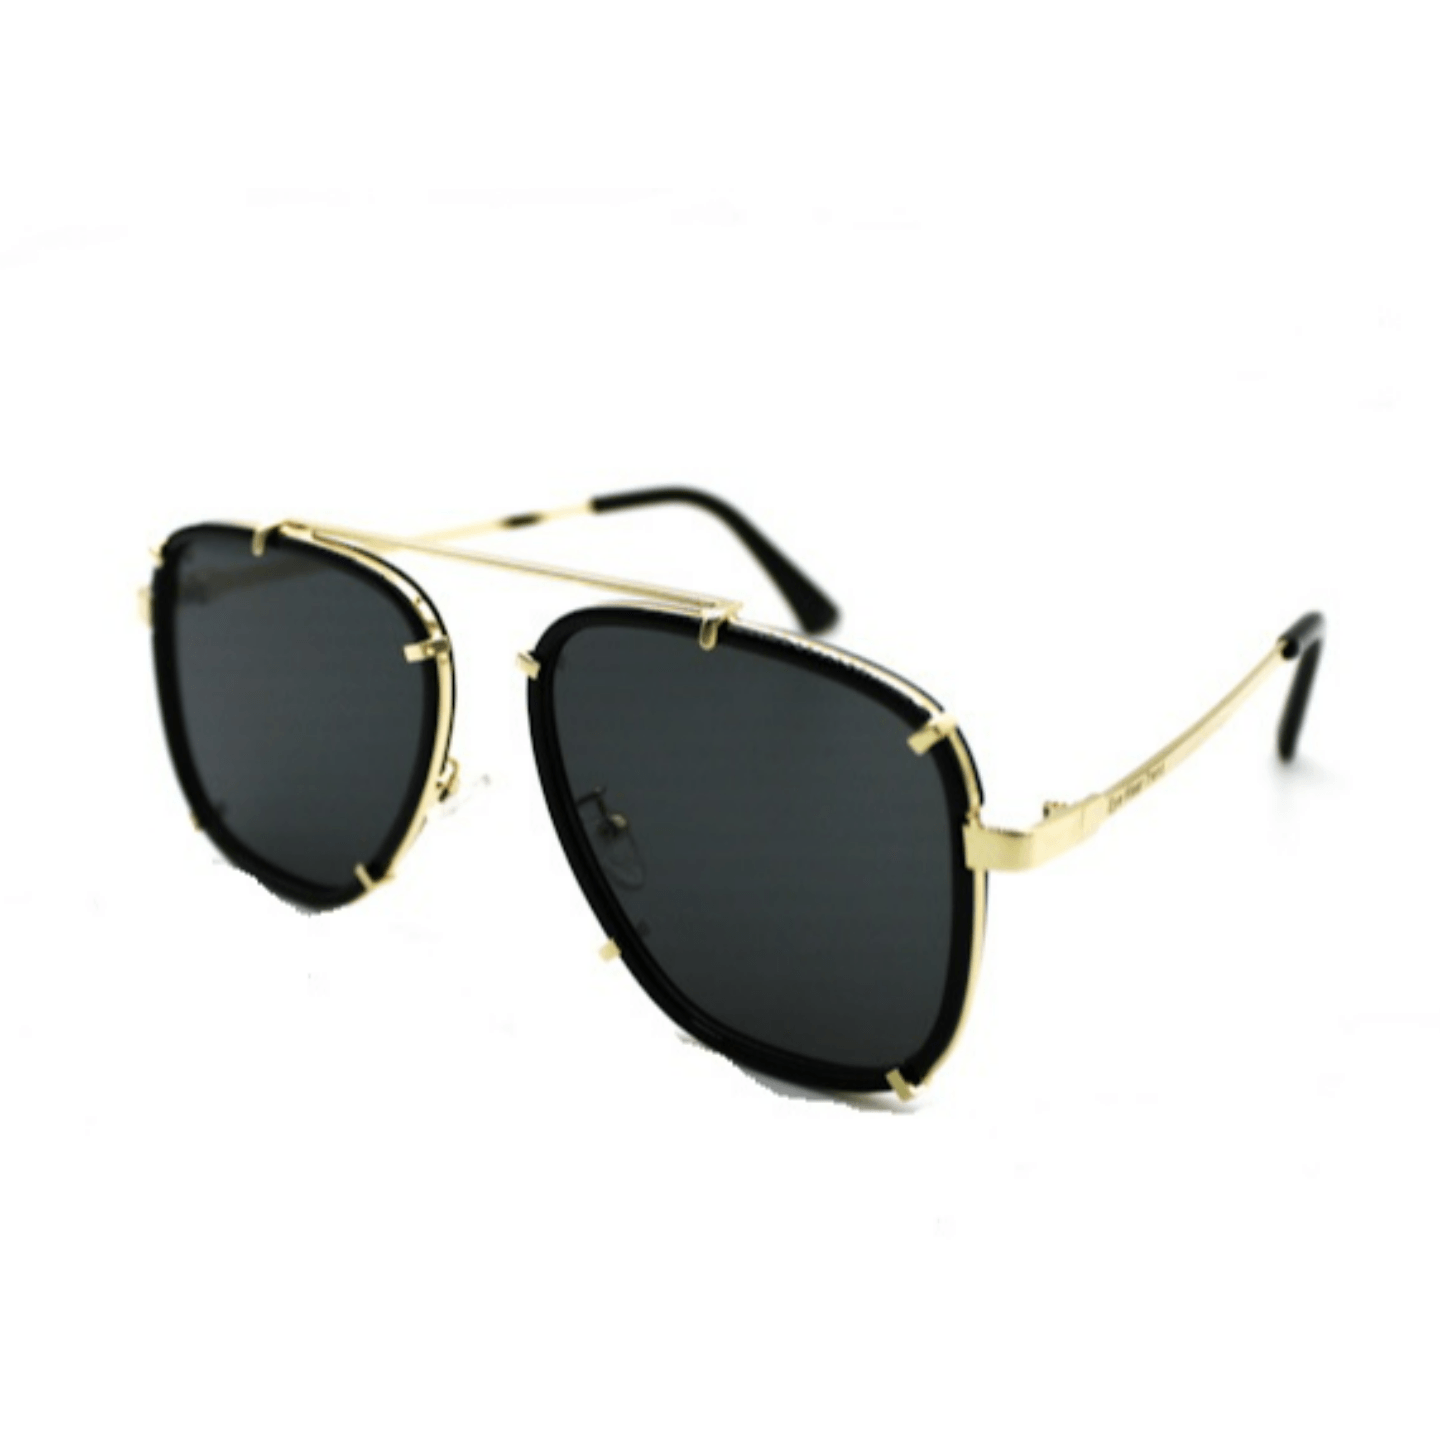 Golden Black Metal Sunglasses For men and women